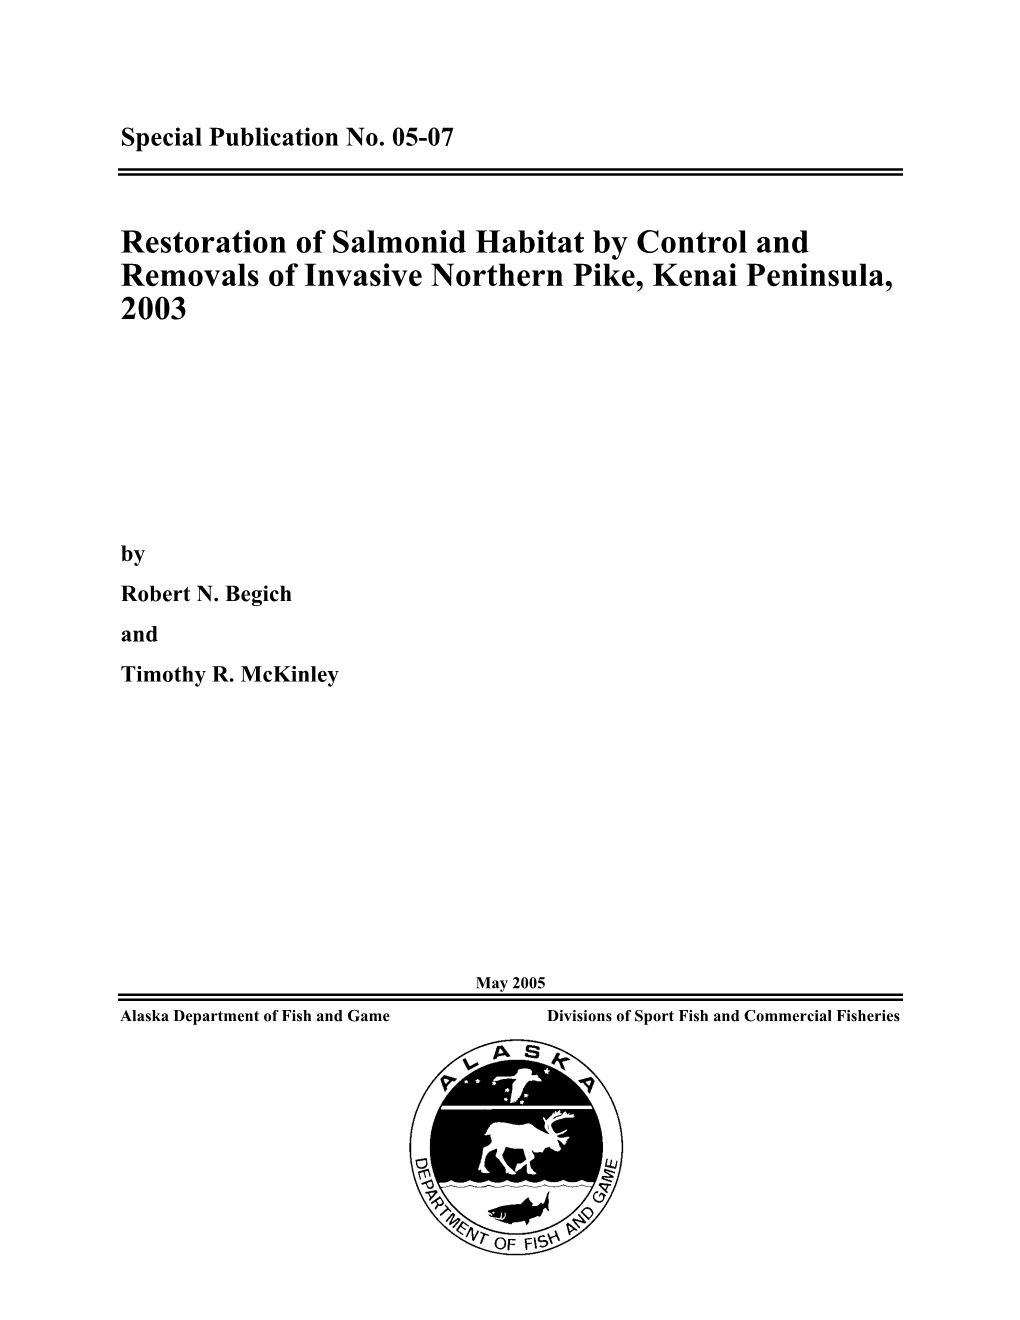 Restoration of Salmonid Habitat by Control and Removals of Invasive Northern Pike, Kenai Peninsula, 2003